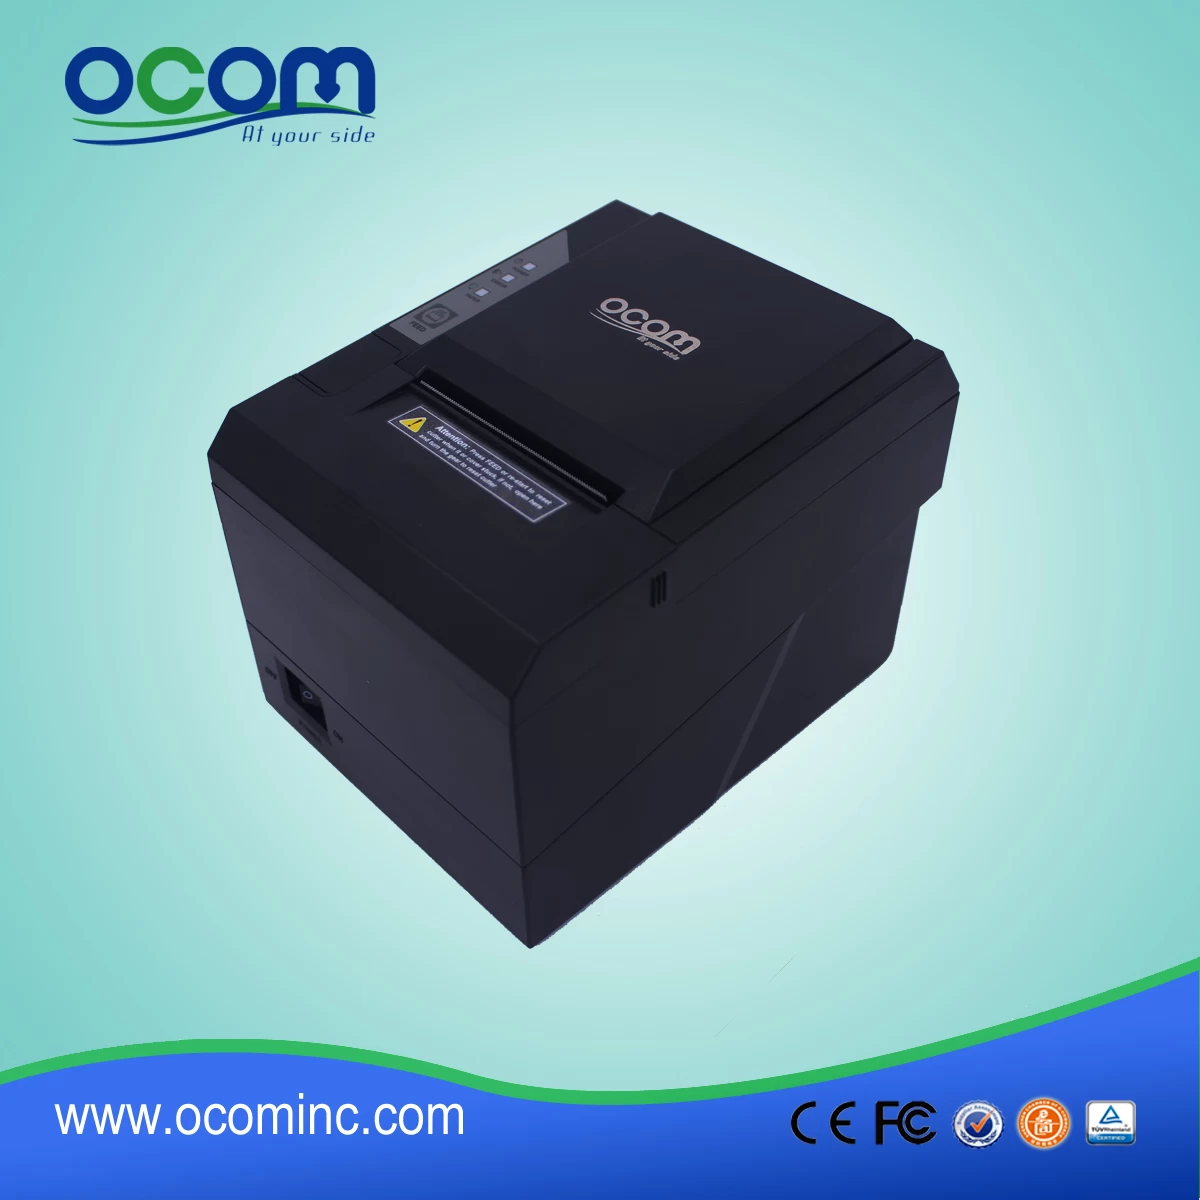 OCPP-80G heavy duty bill printing machine price cheap